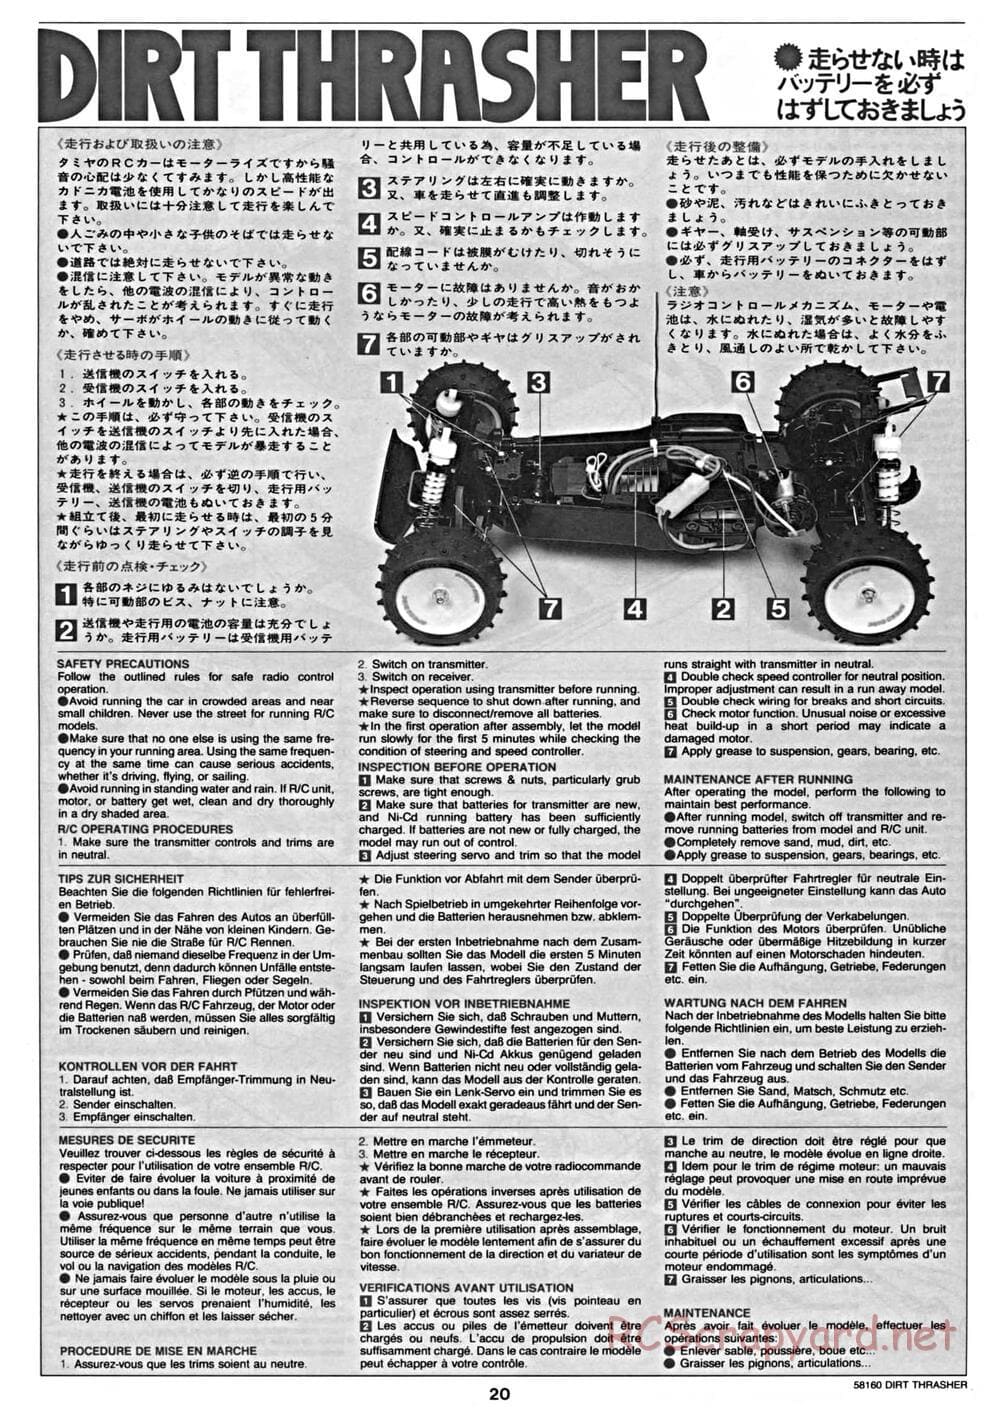 Tamiya - Dirt Thrasher Chassis - Manual - Page 20